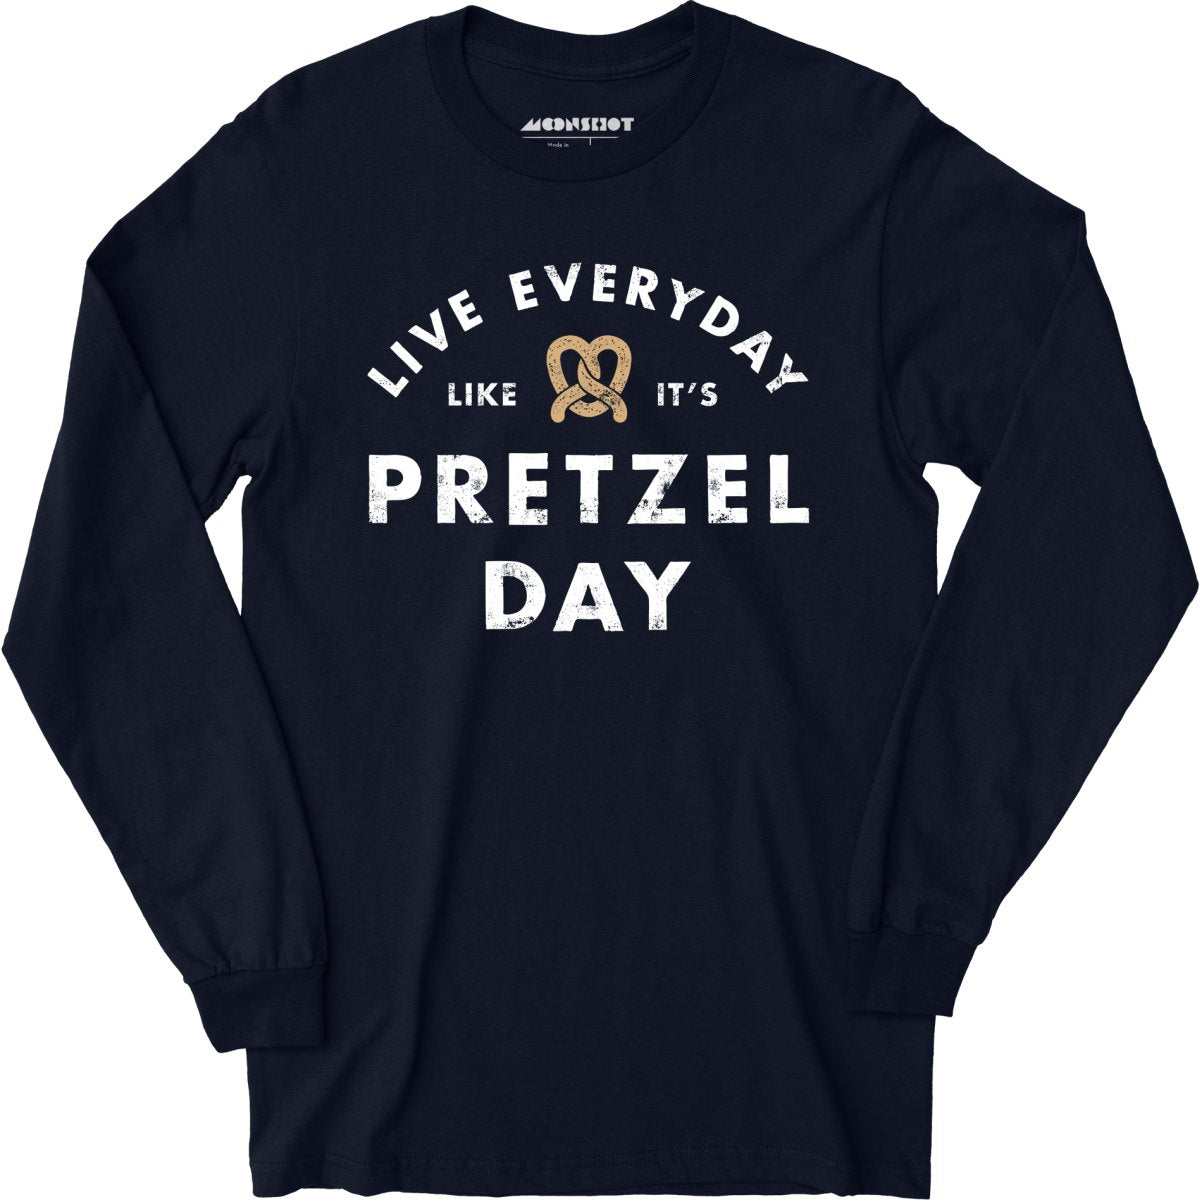 Live Everyday Like It's Pretzel Day - Long Sleeve T-Shirt